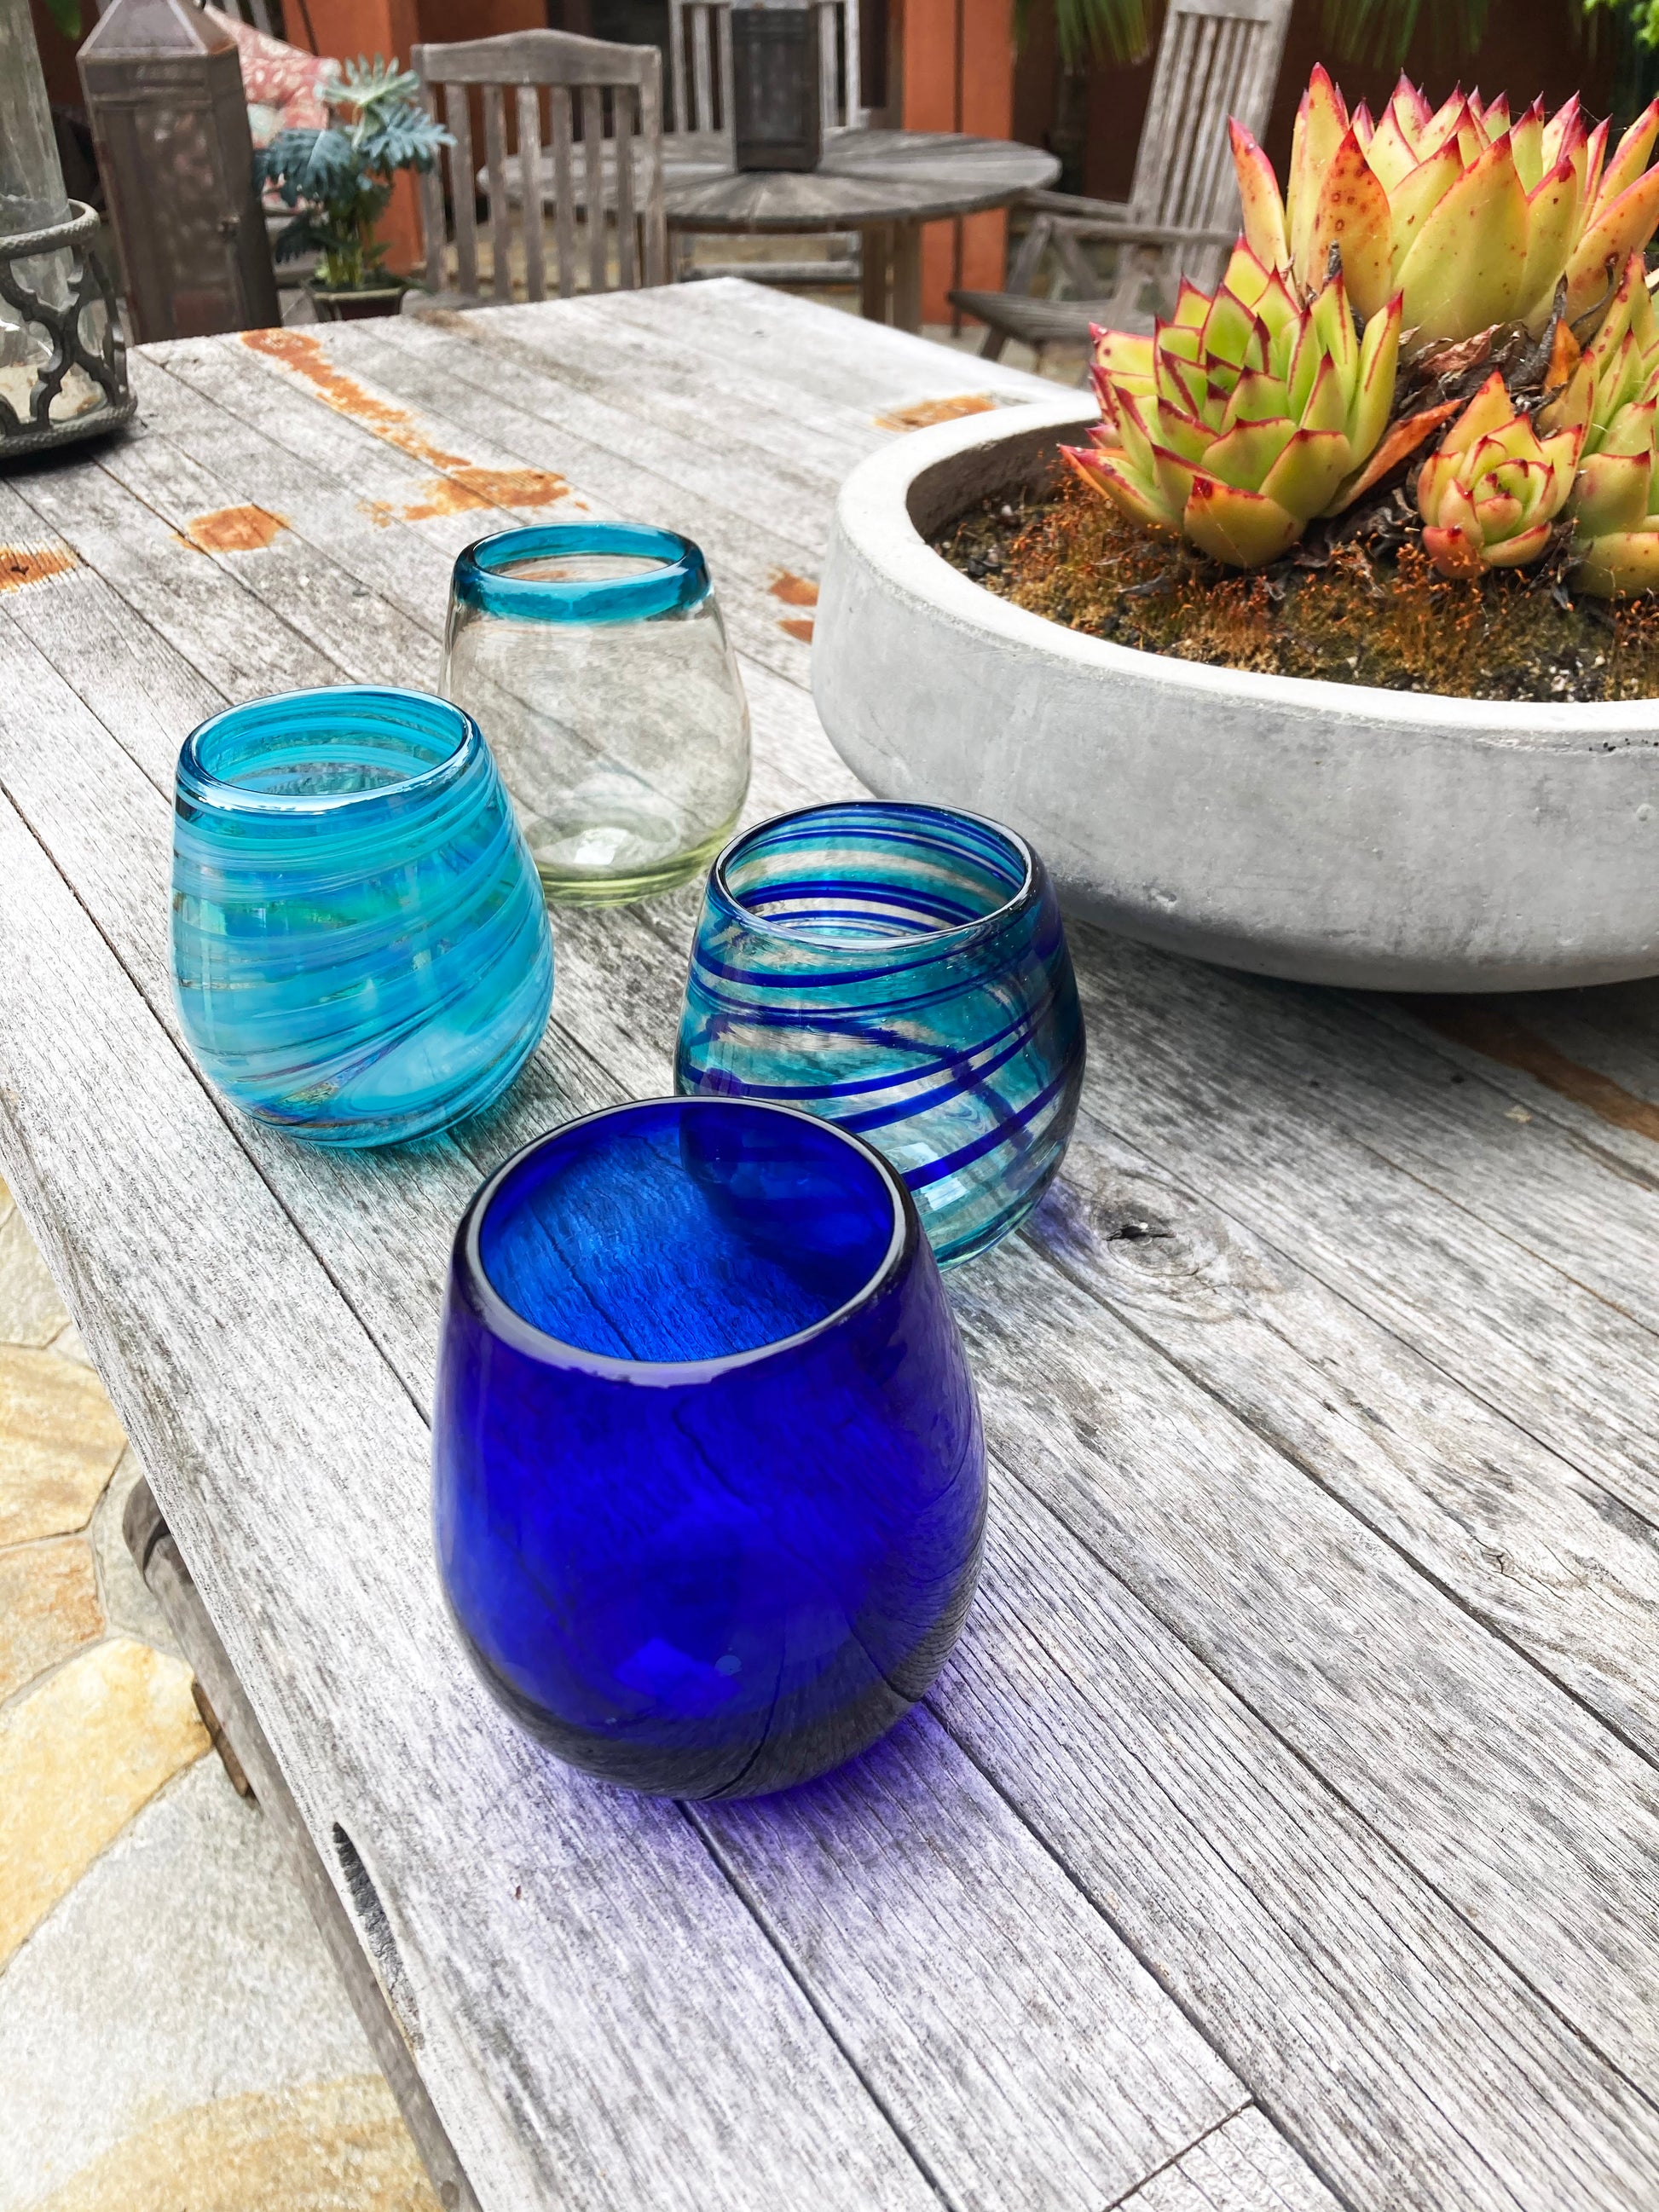 Hand Blown Glass: Blue Stemless Wine Glass 